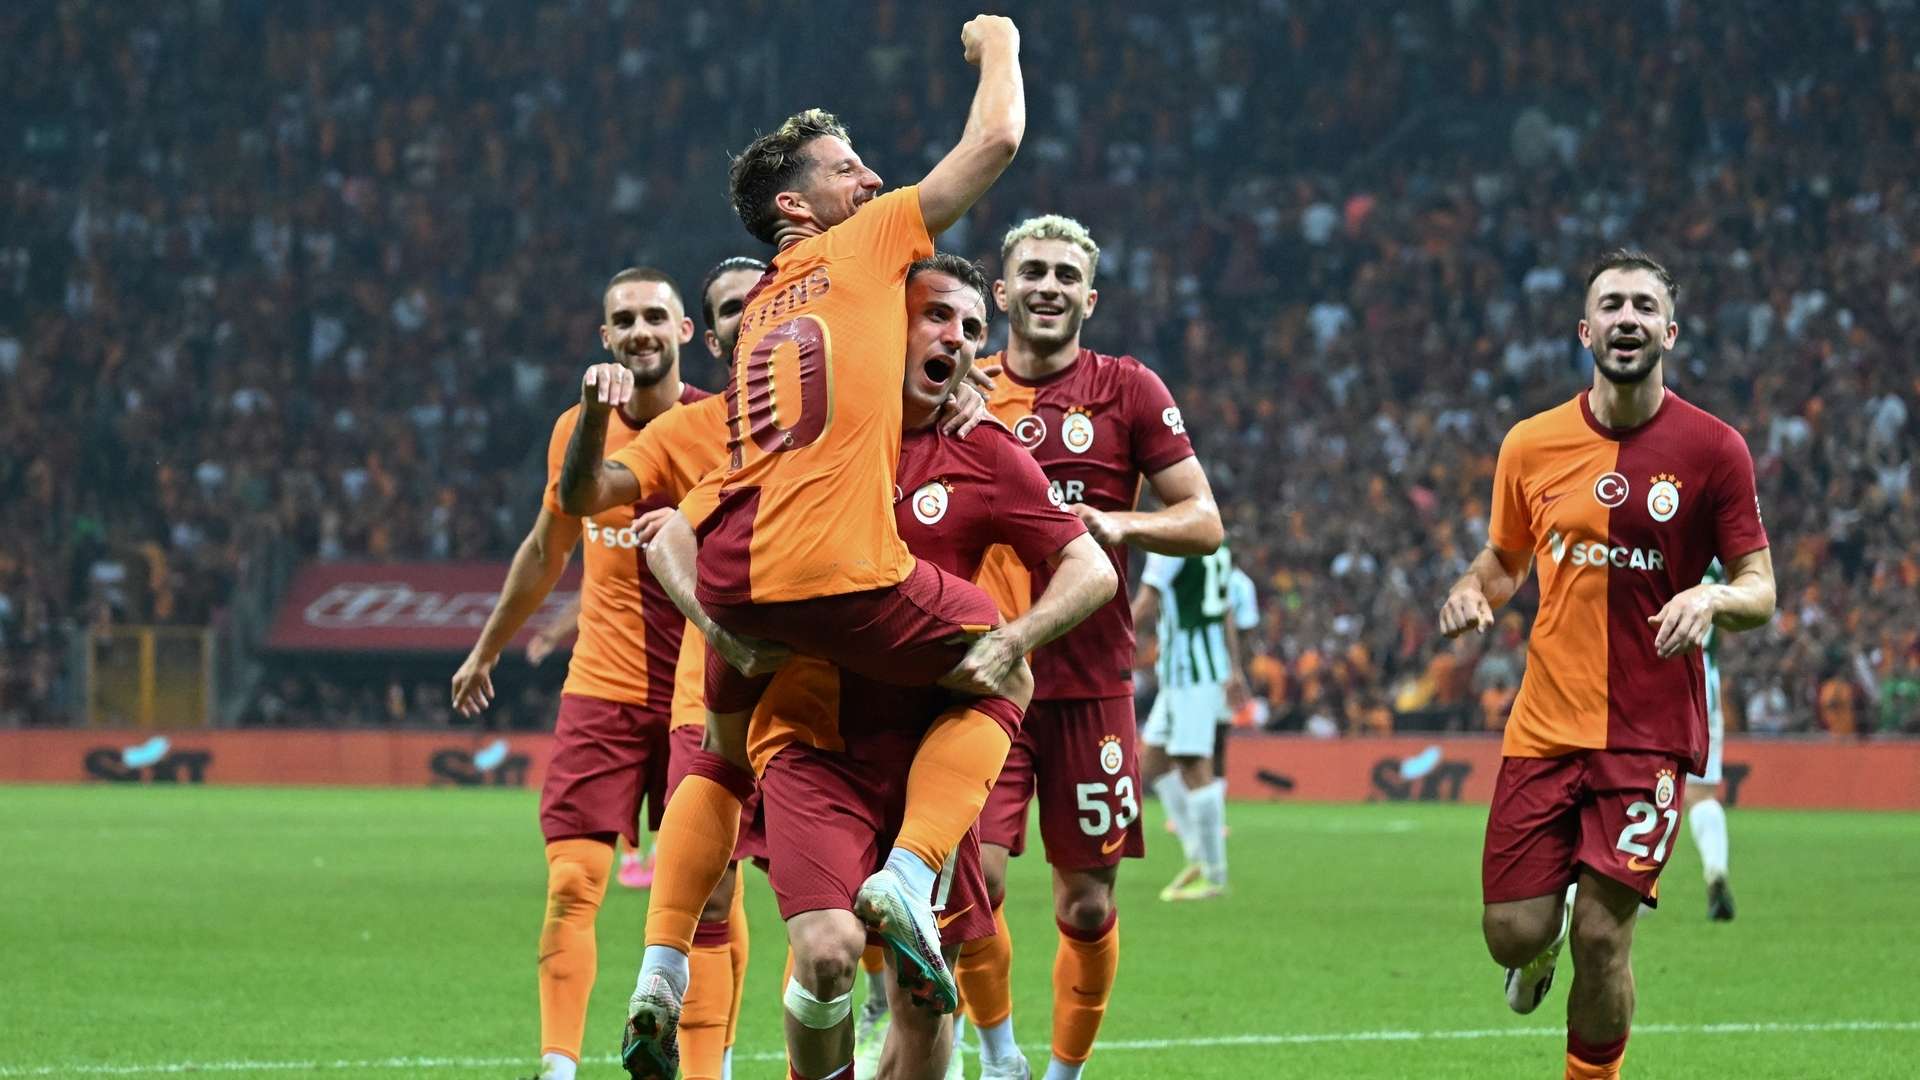  Galatasaray vs Zalgiris